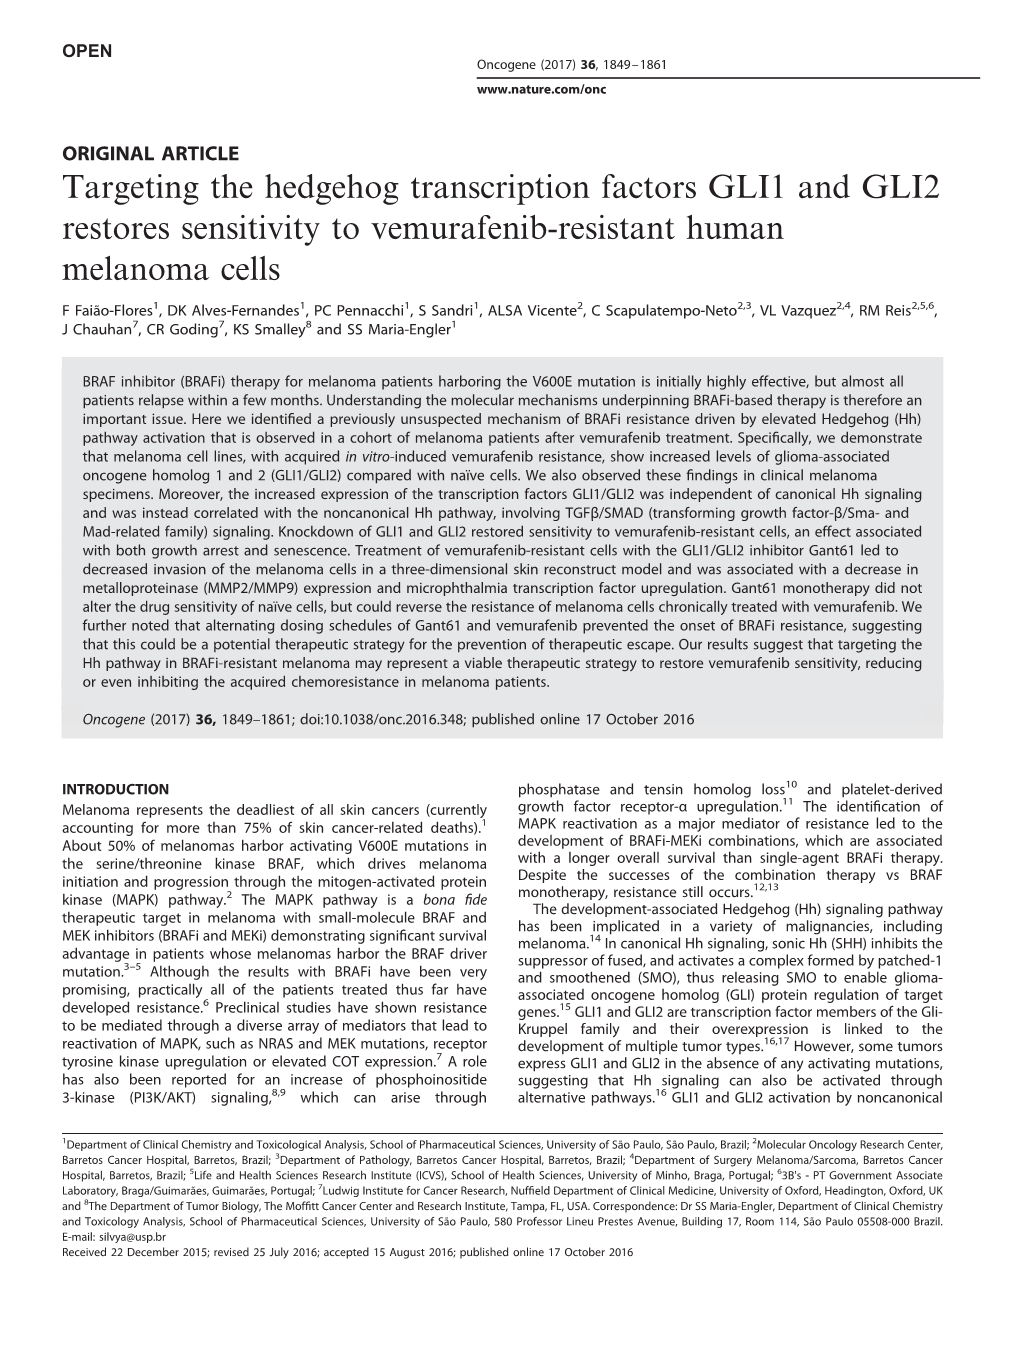 Targeting the Hedgehog Transcription Factors GLI1 and GLI2 Restores Sensitivity to Vemurafenib-Resistant Human Melanoma Cells